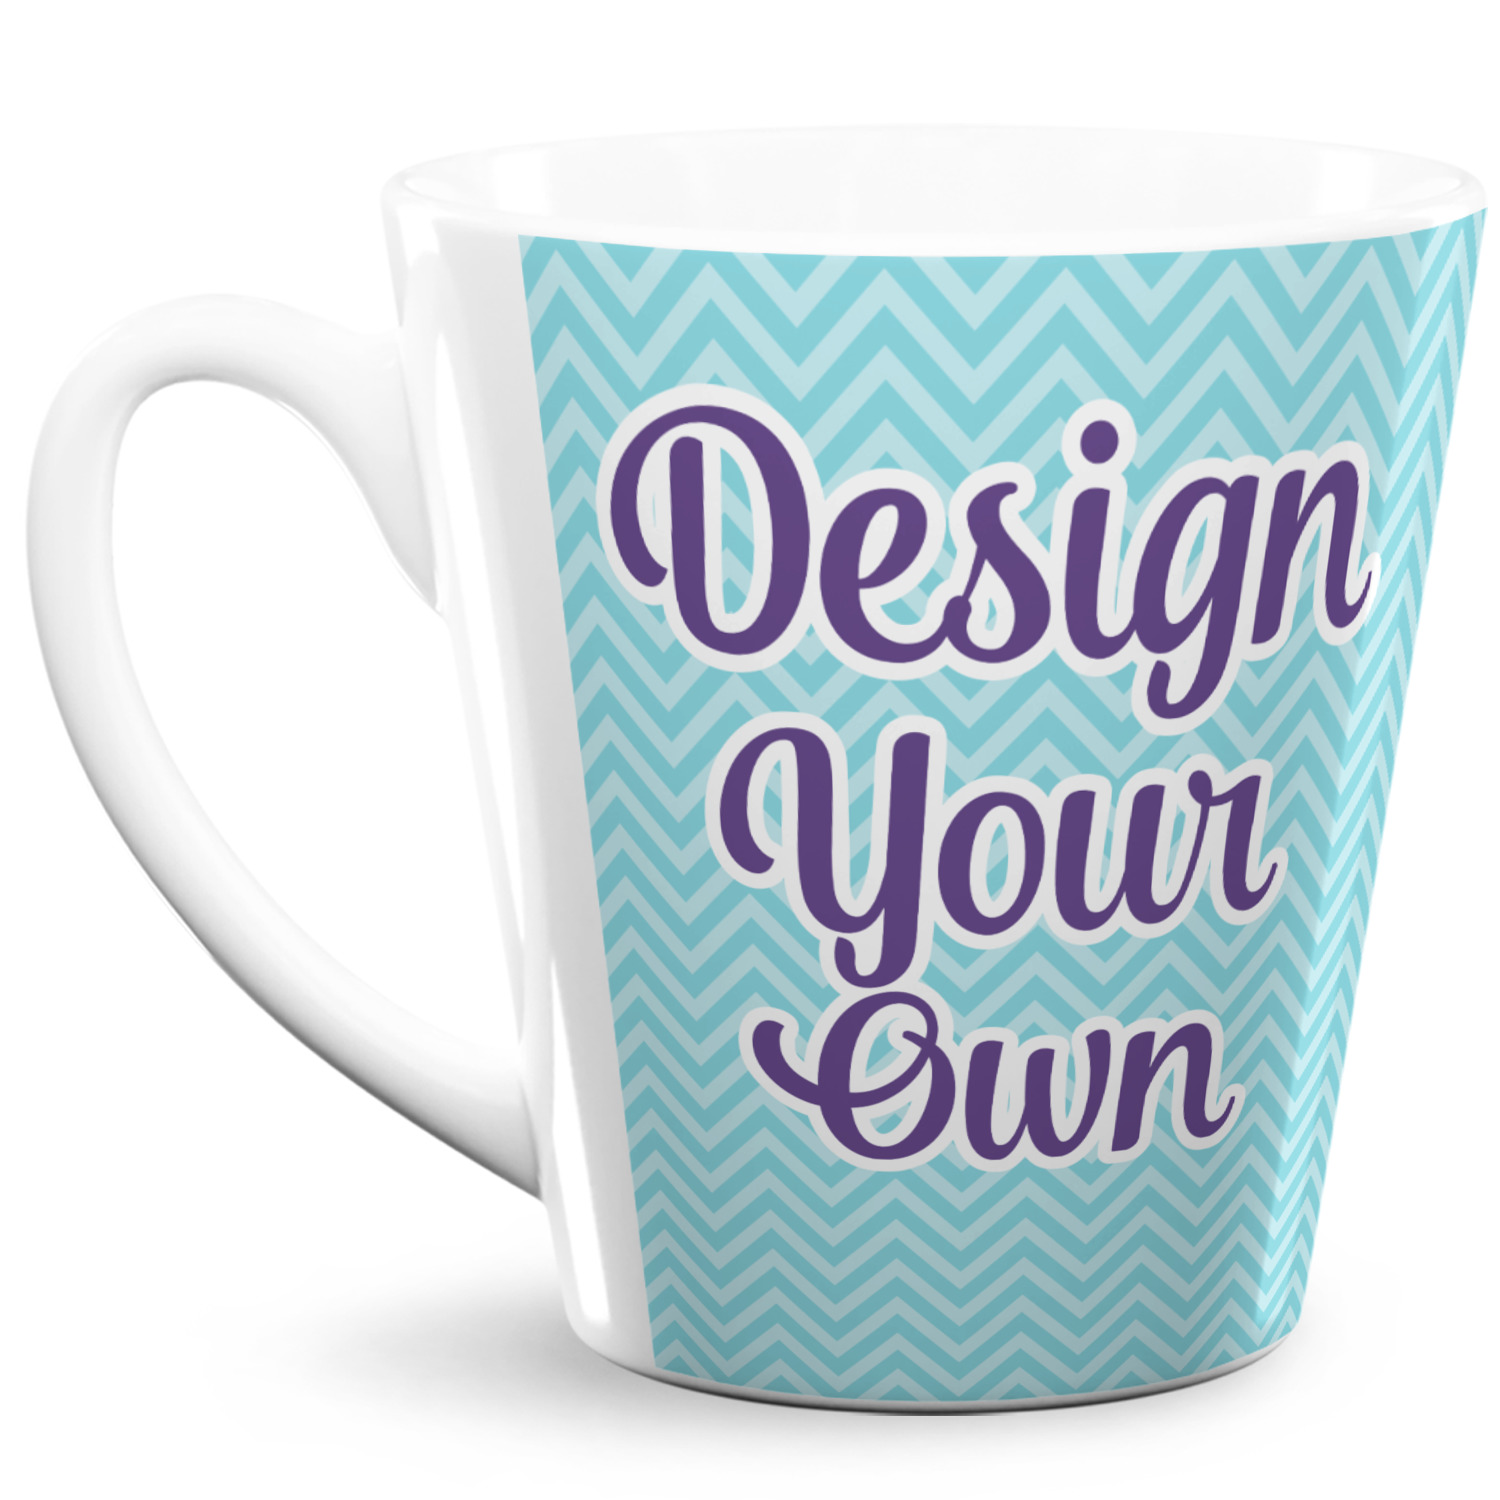 https://www.youcustomizeit.com/common/MAKE/965833/Design-Your-Own-12-Oz-Latte-Mug-Front-Full.jpg?lm=1604354503